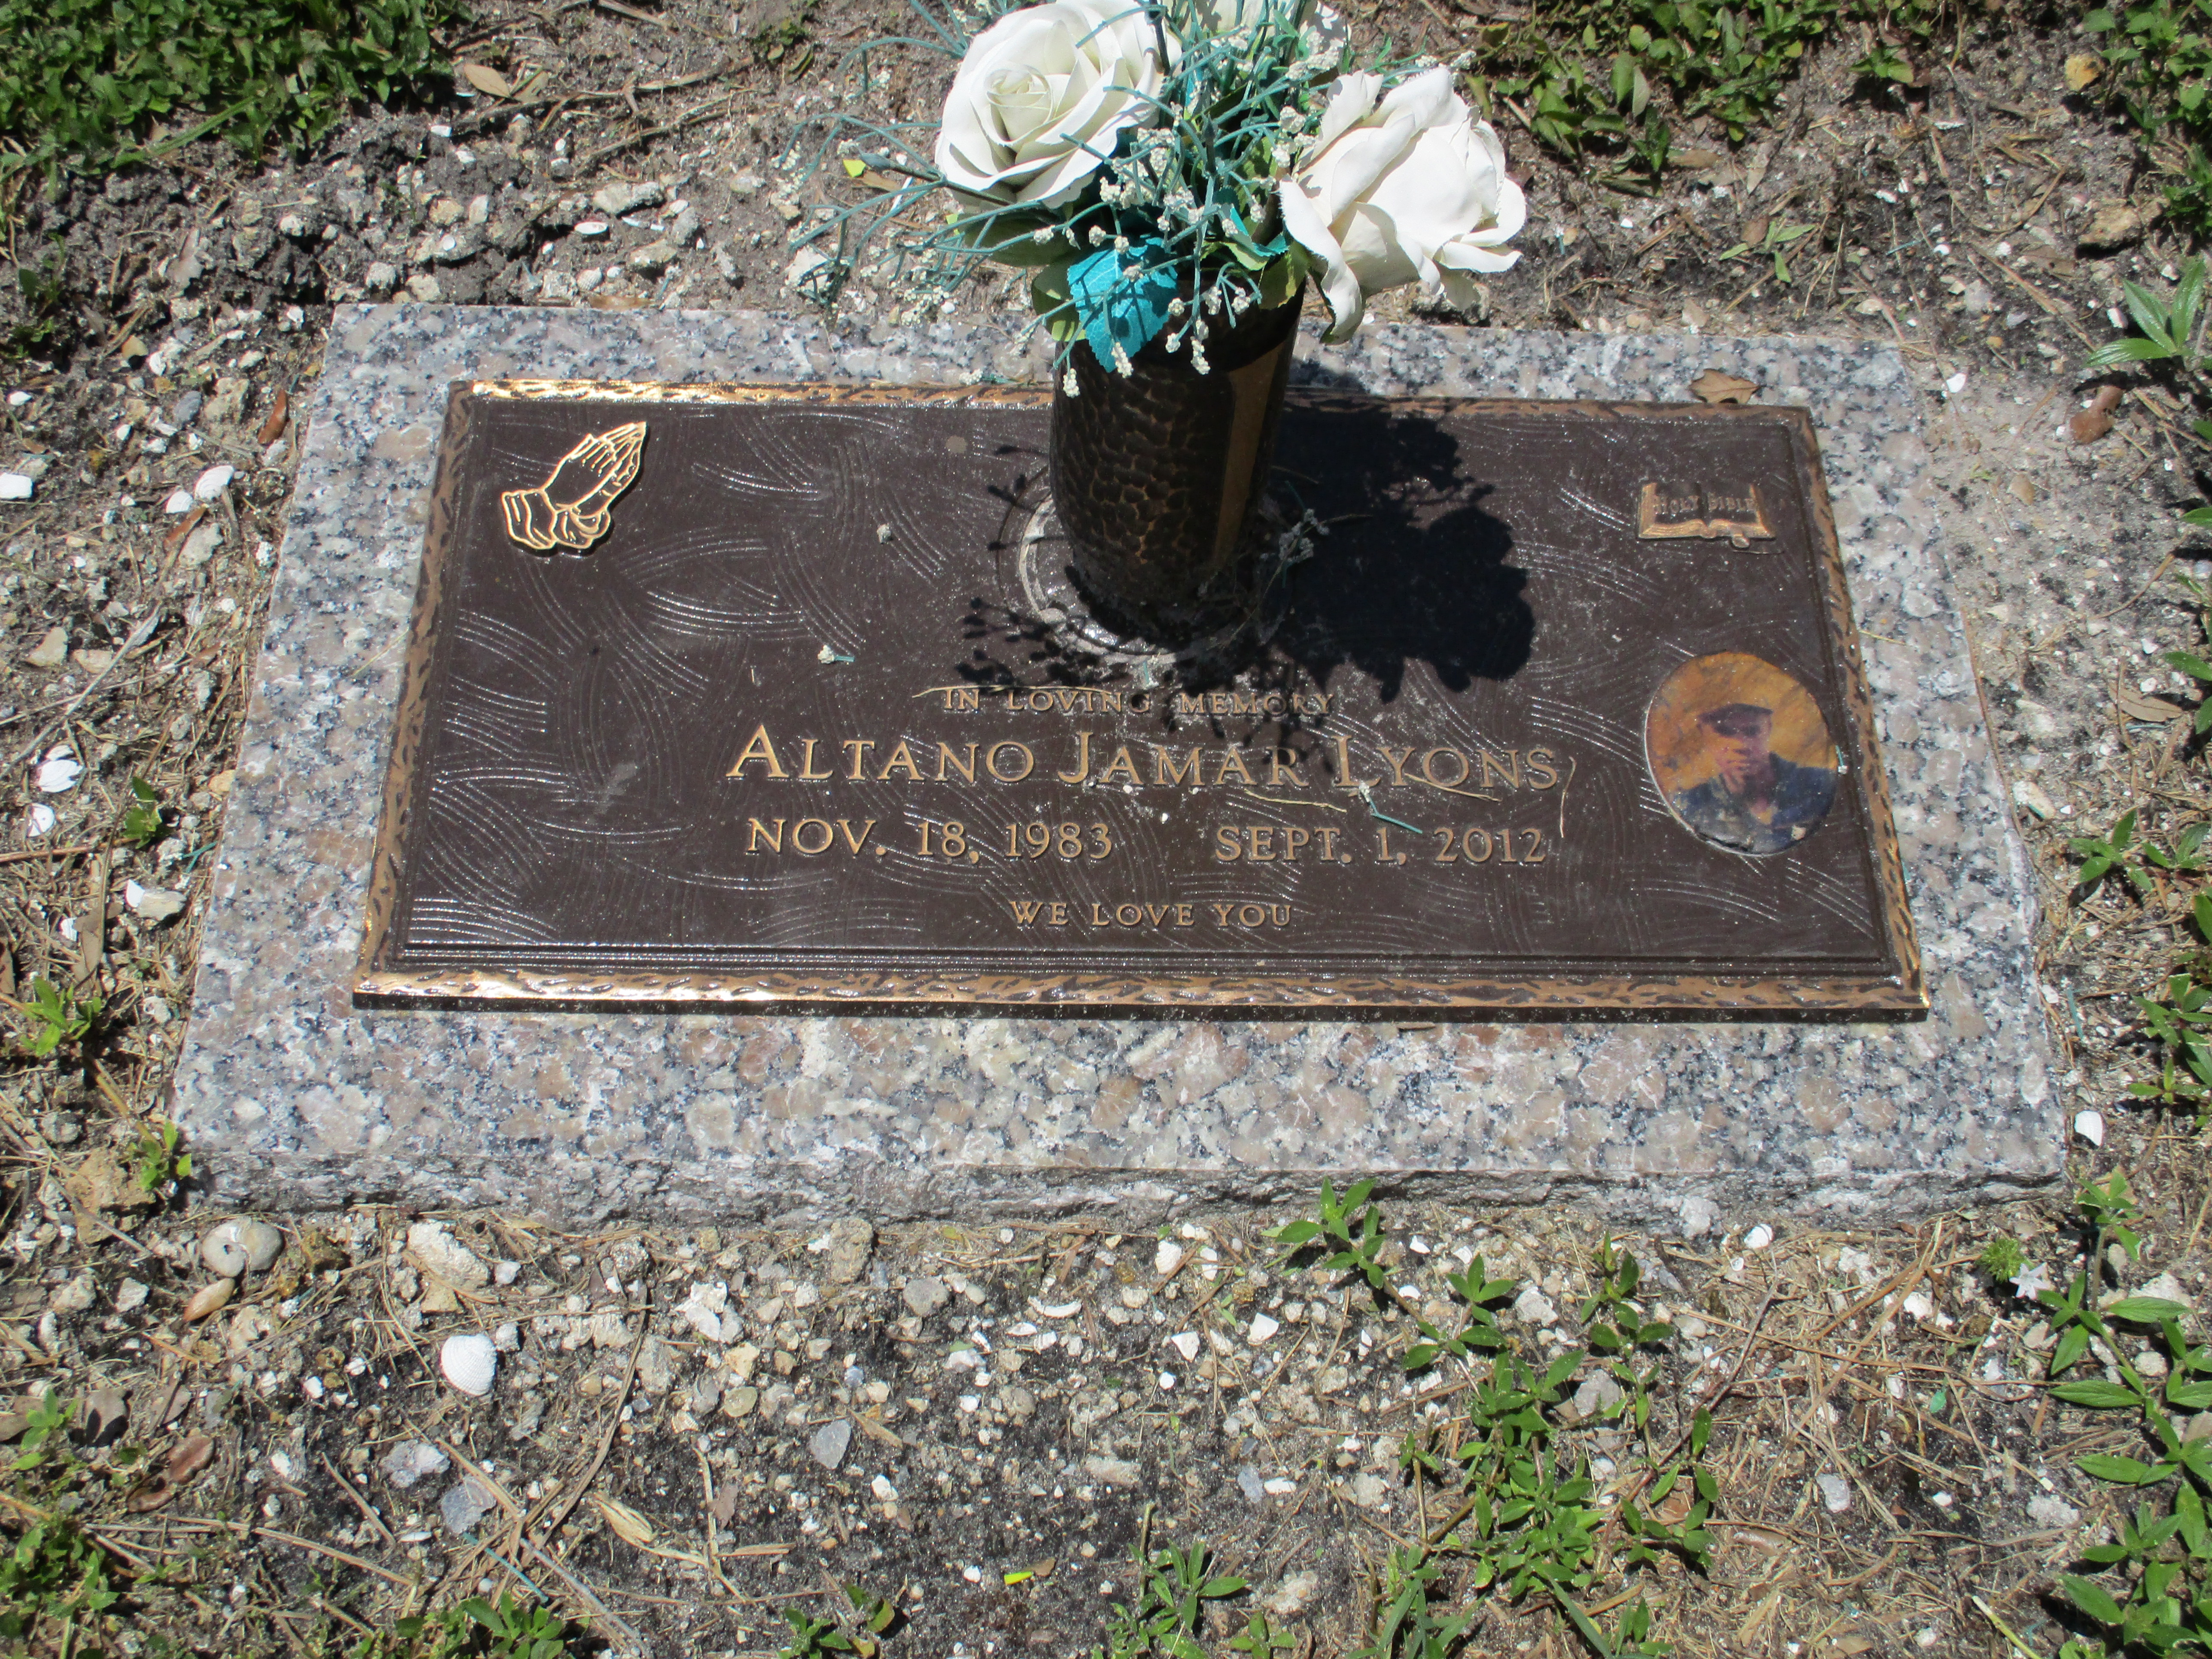 Altano Jamar Lyons